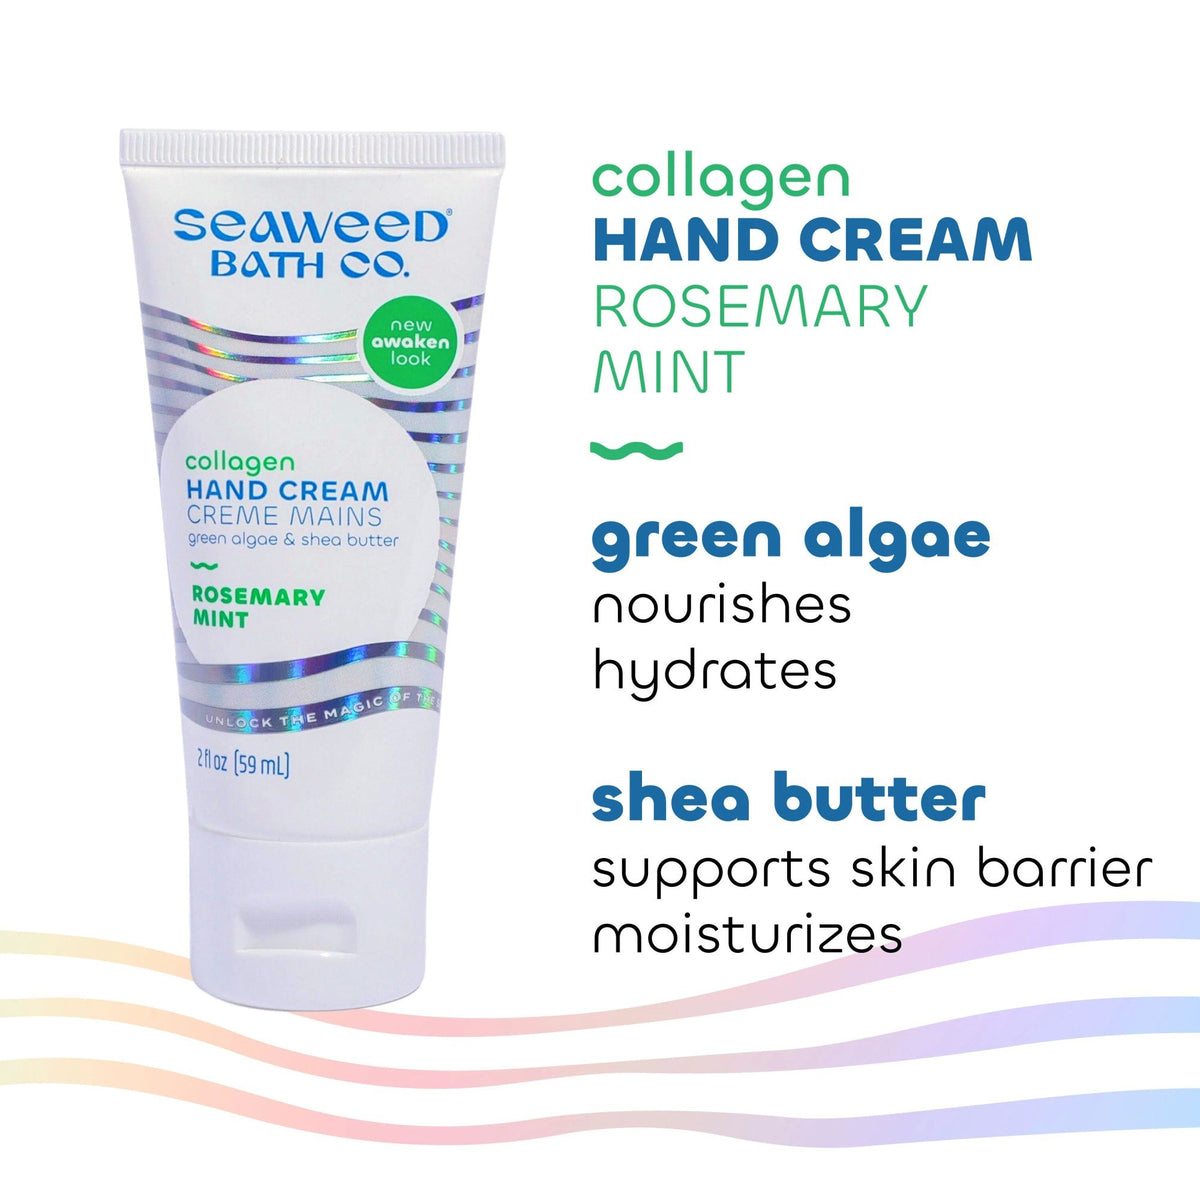 The Seaweed Bath Co. Collagen Hand Cream Rosemary Mint 2 oz Cream